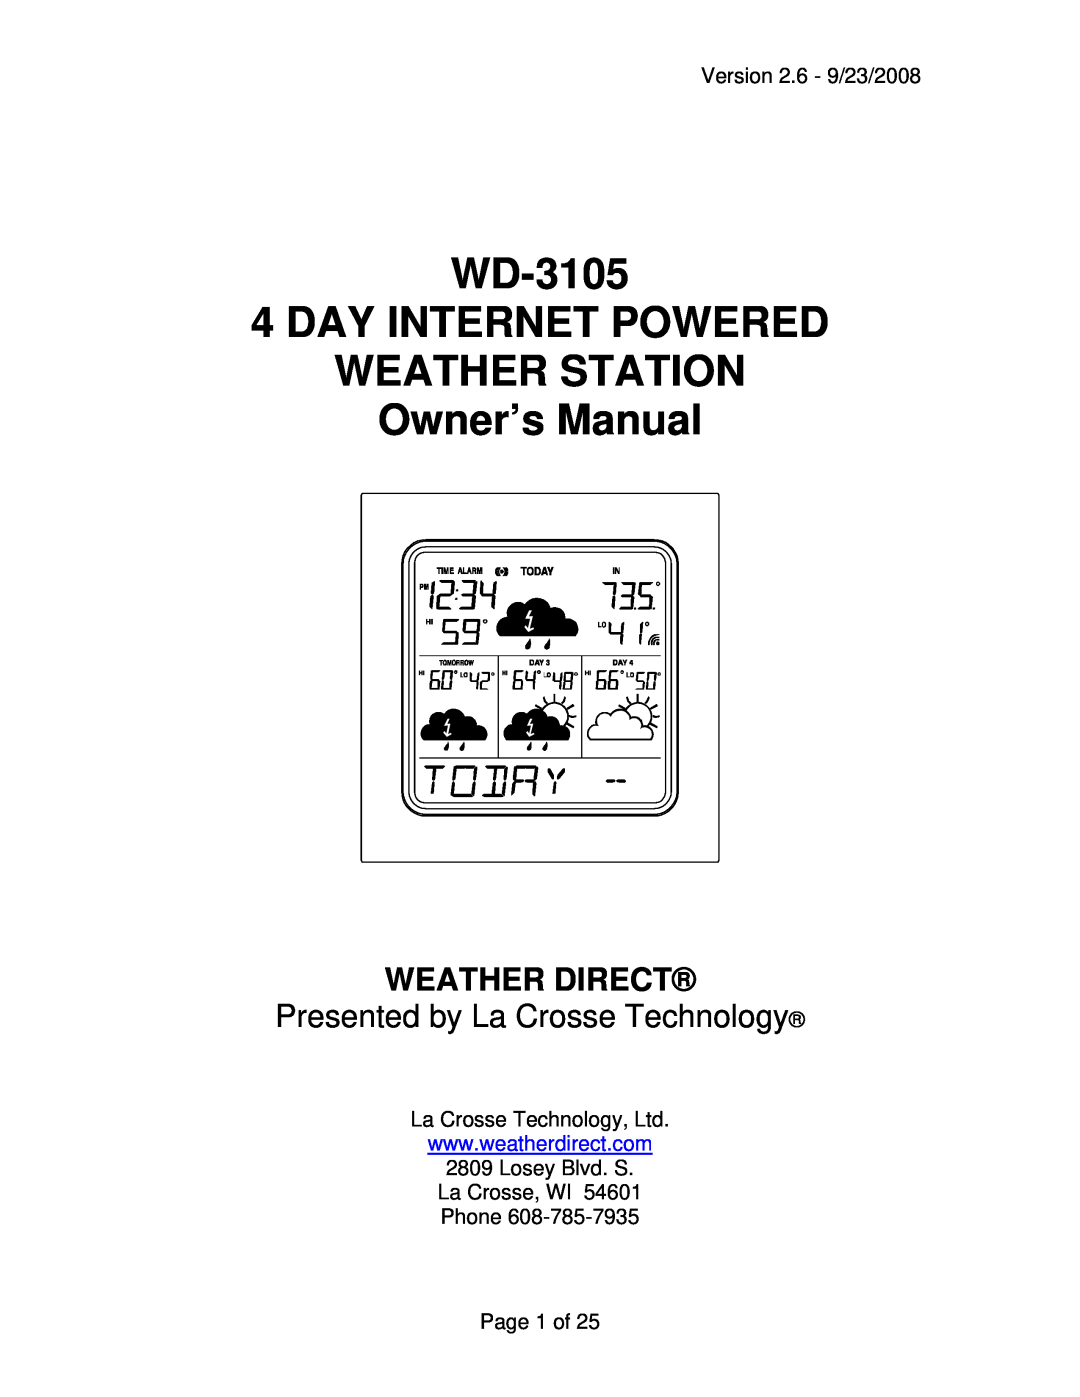 La Crosse Technology WD-3105 owner manual Weather Direct, Presented by La Crosse Technology 